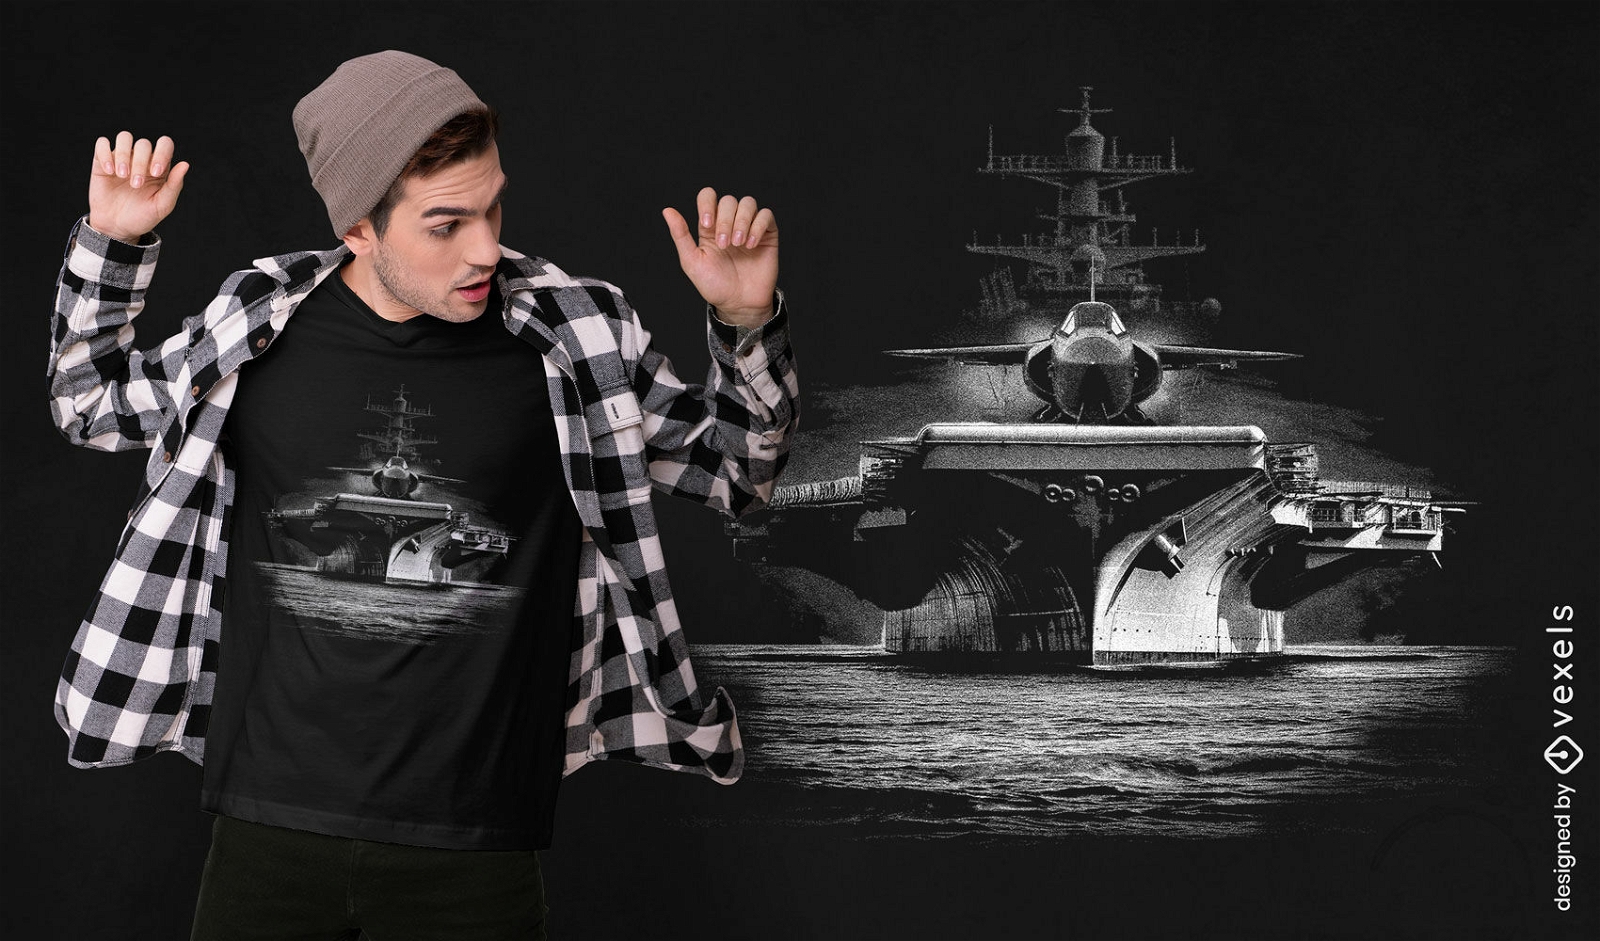 Aircraft carrier realistiic t-shirt design